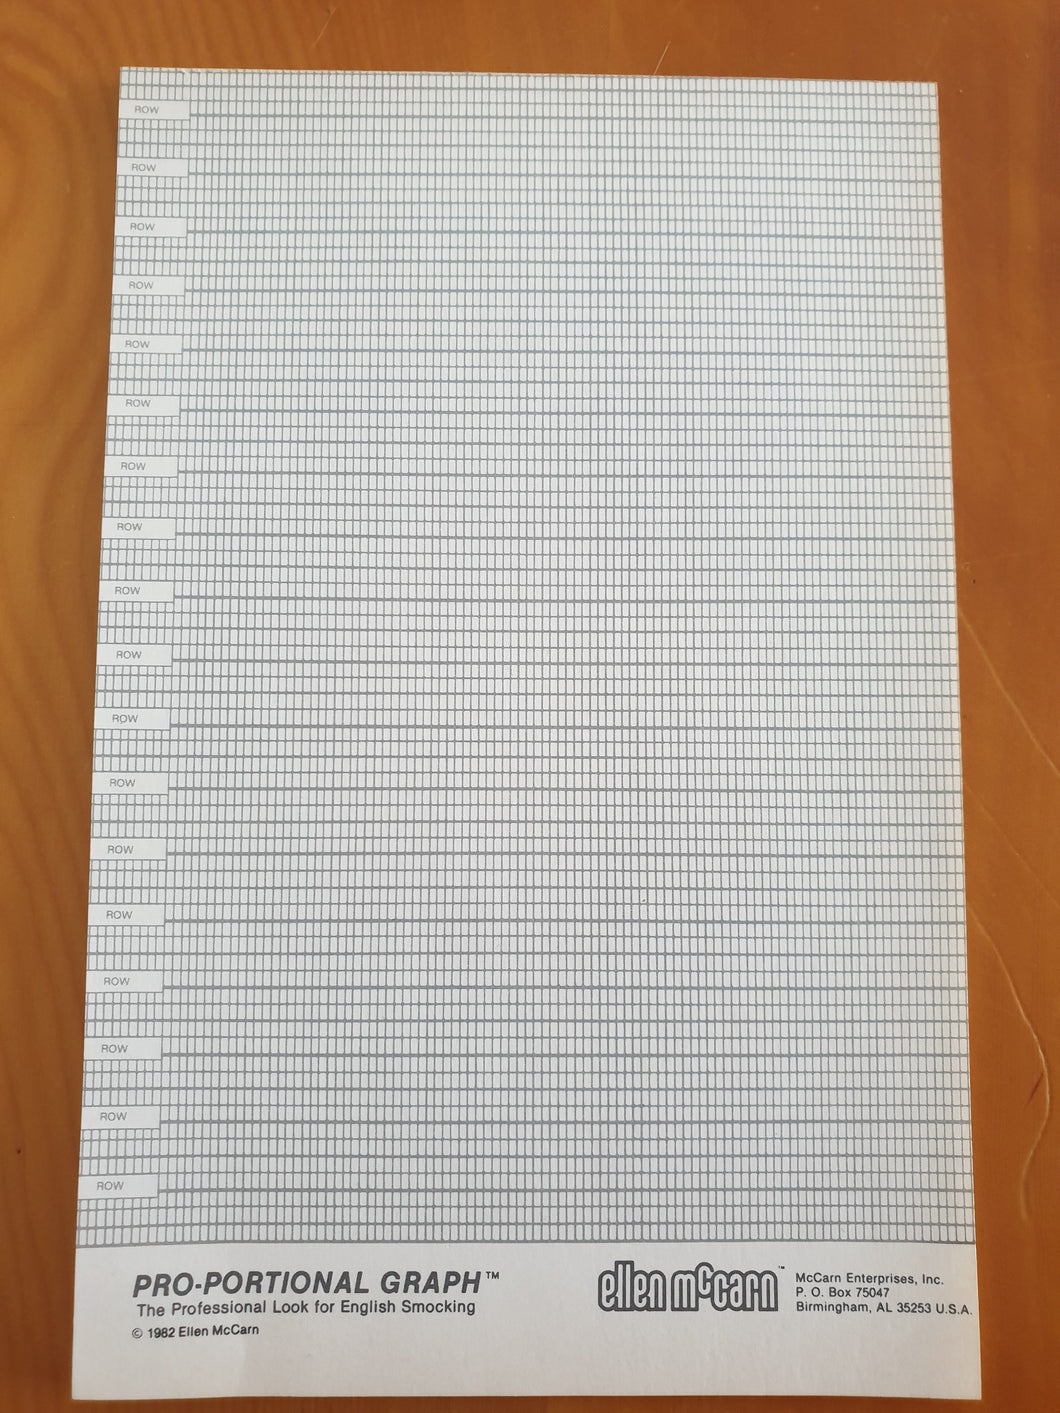 Geometric Graph Paper Pad